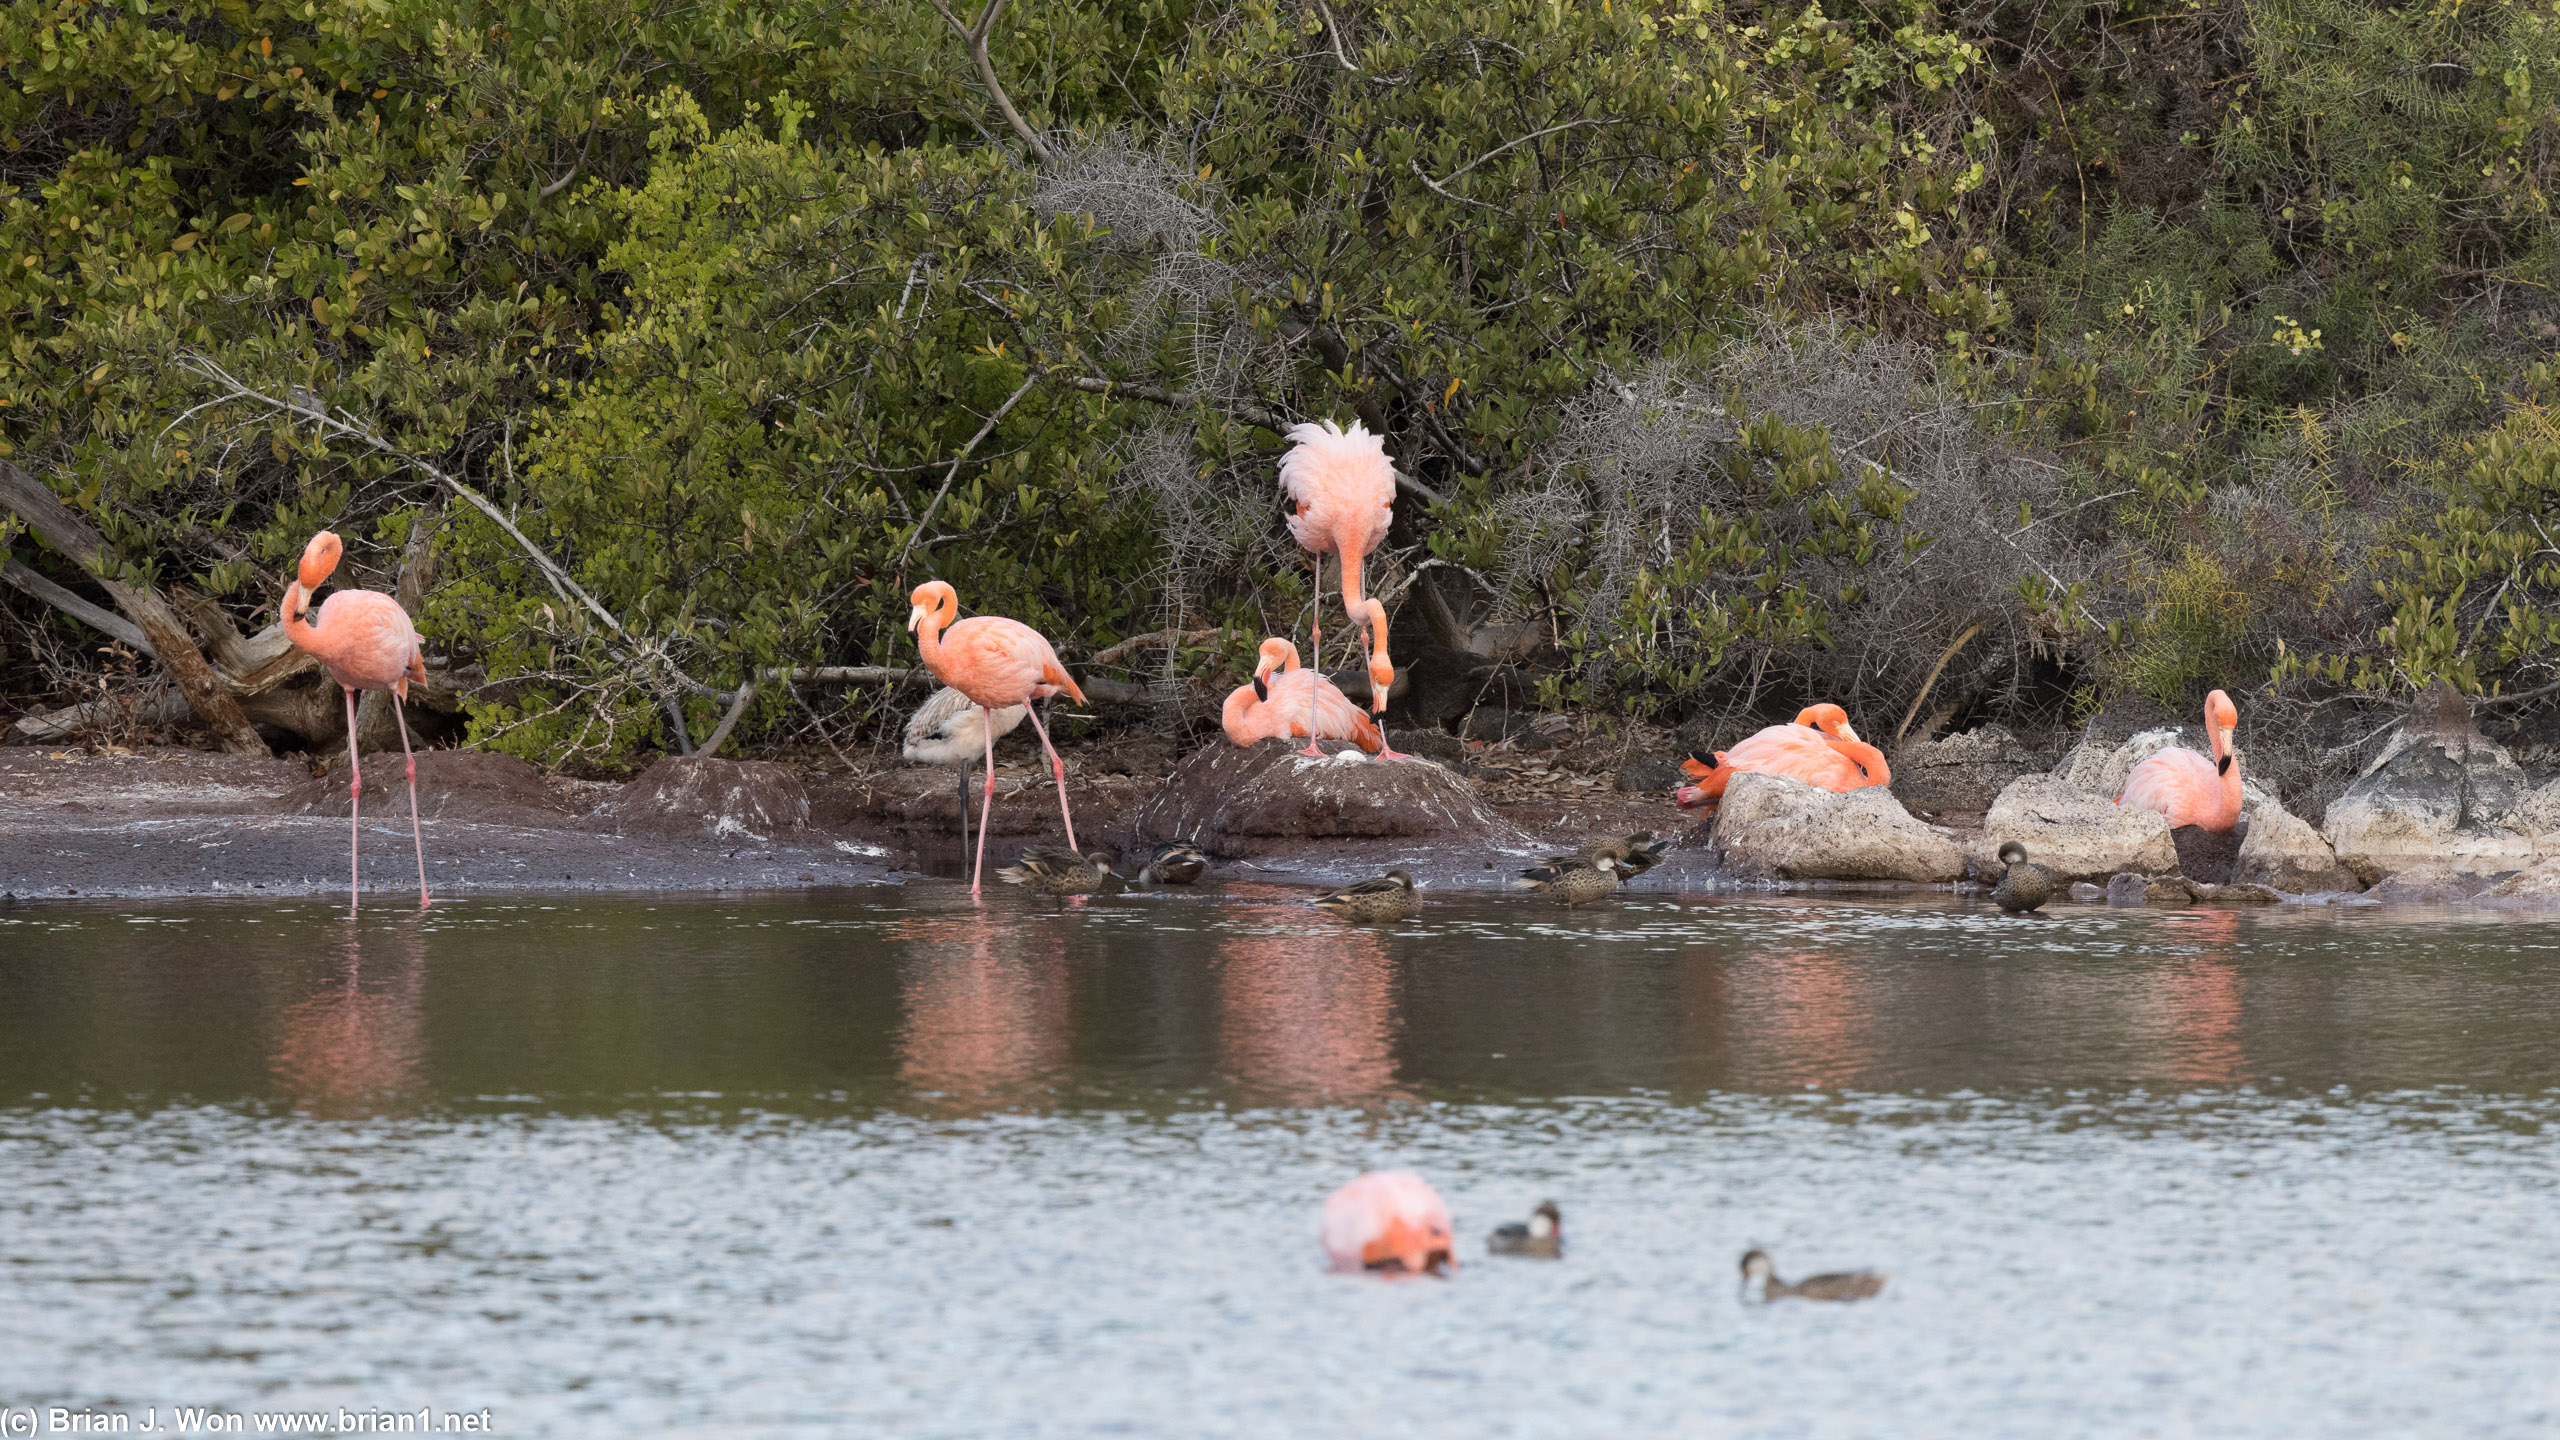 The full spread of flamingos at this lagoon on Isla Rabida.